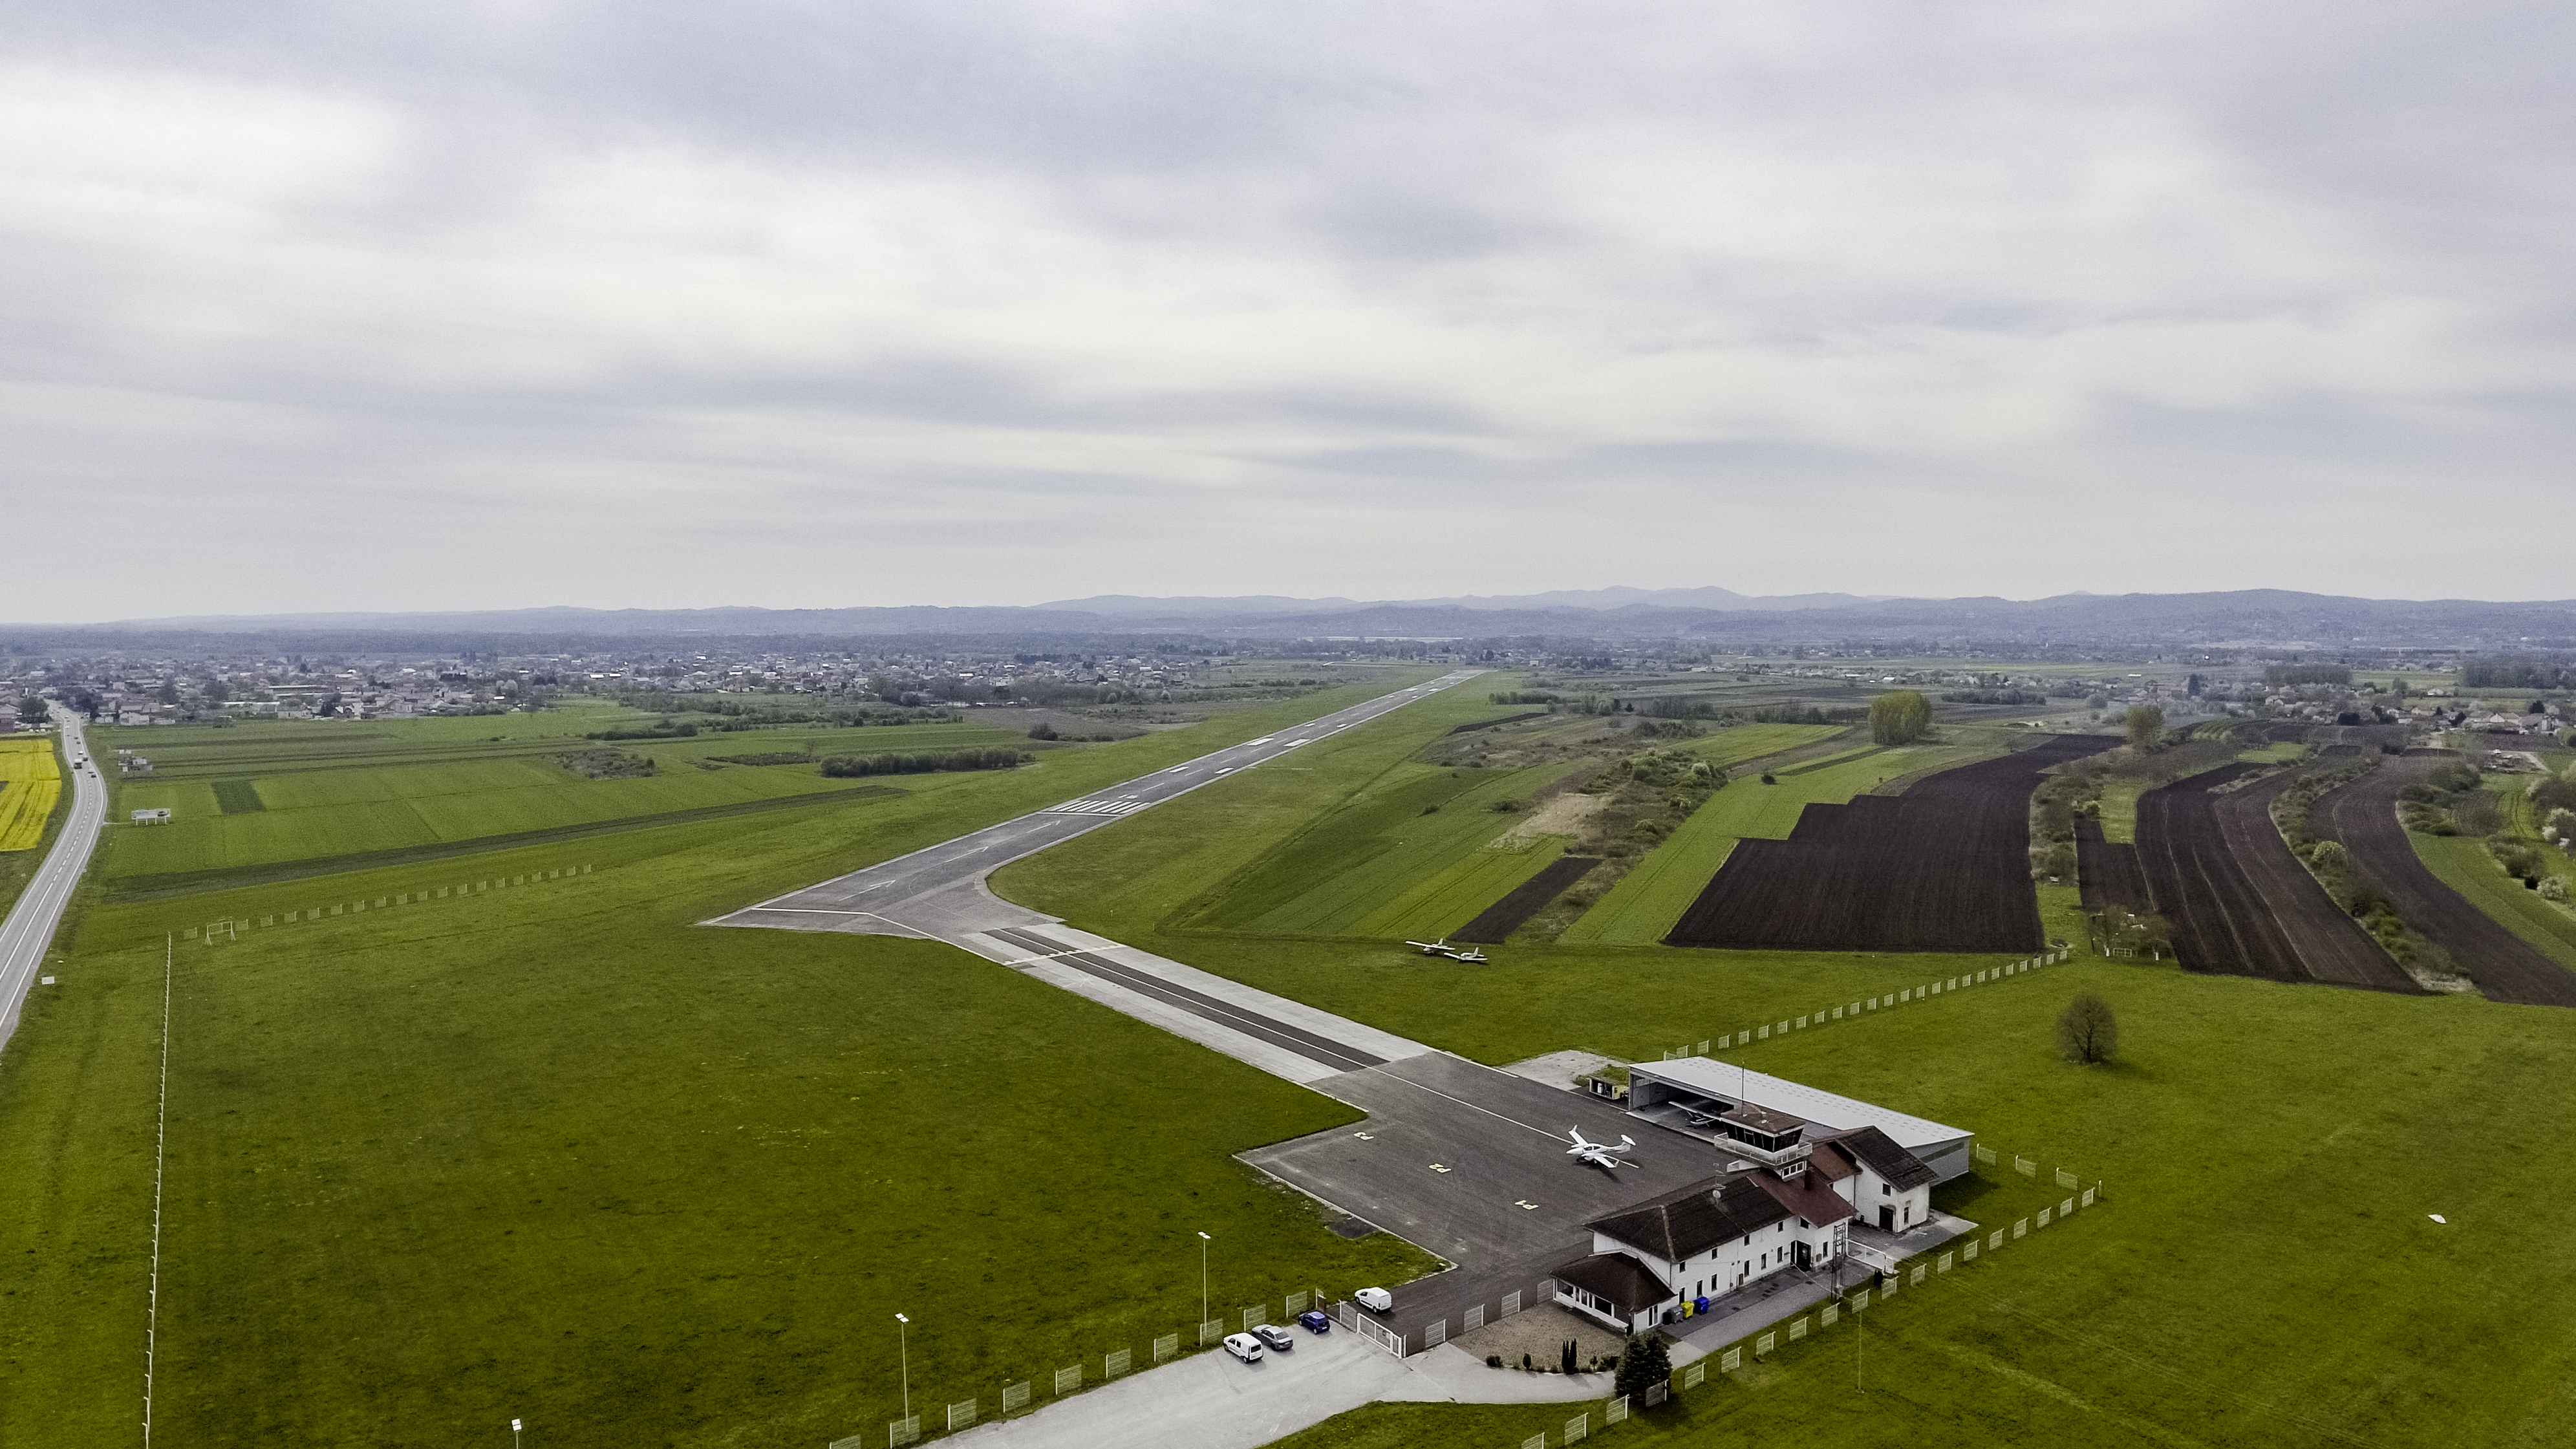 BizAv operator, Jung Sky, fuels plans for growth at Varazdin Airport